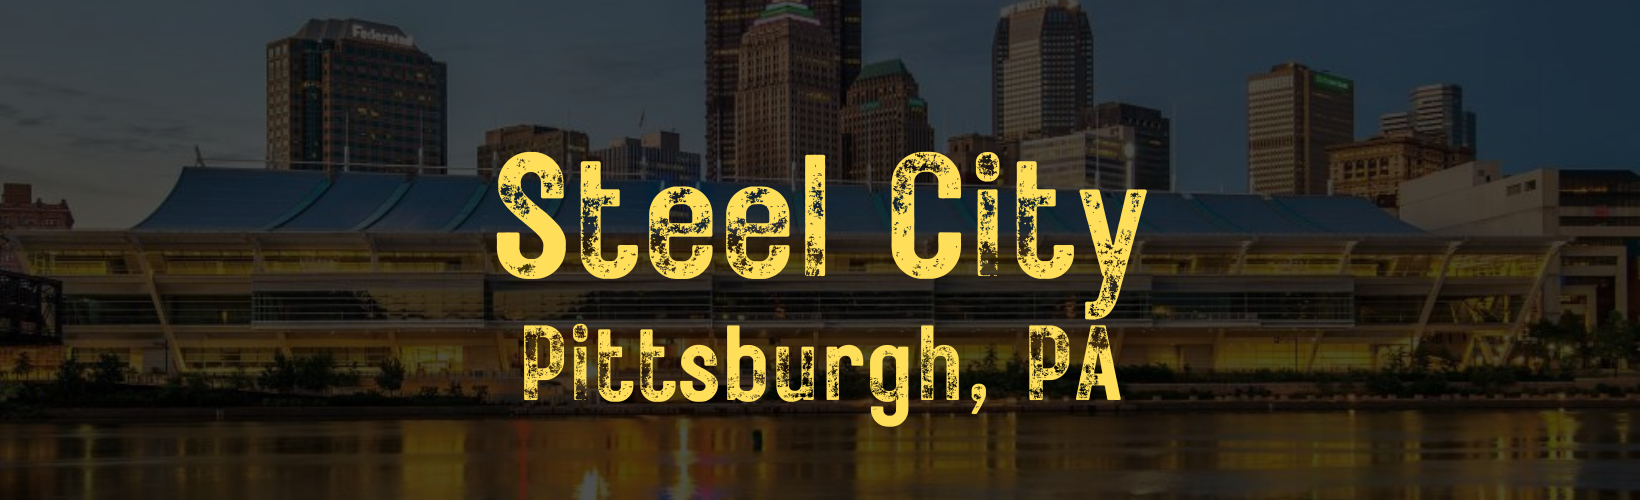 Steel City Gun Show Image